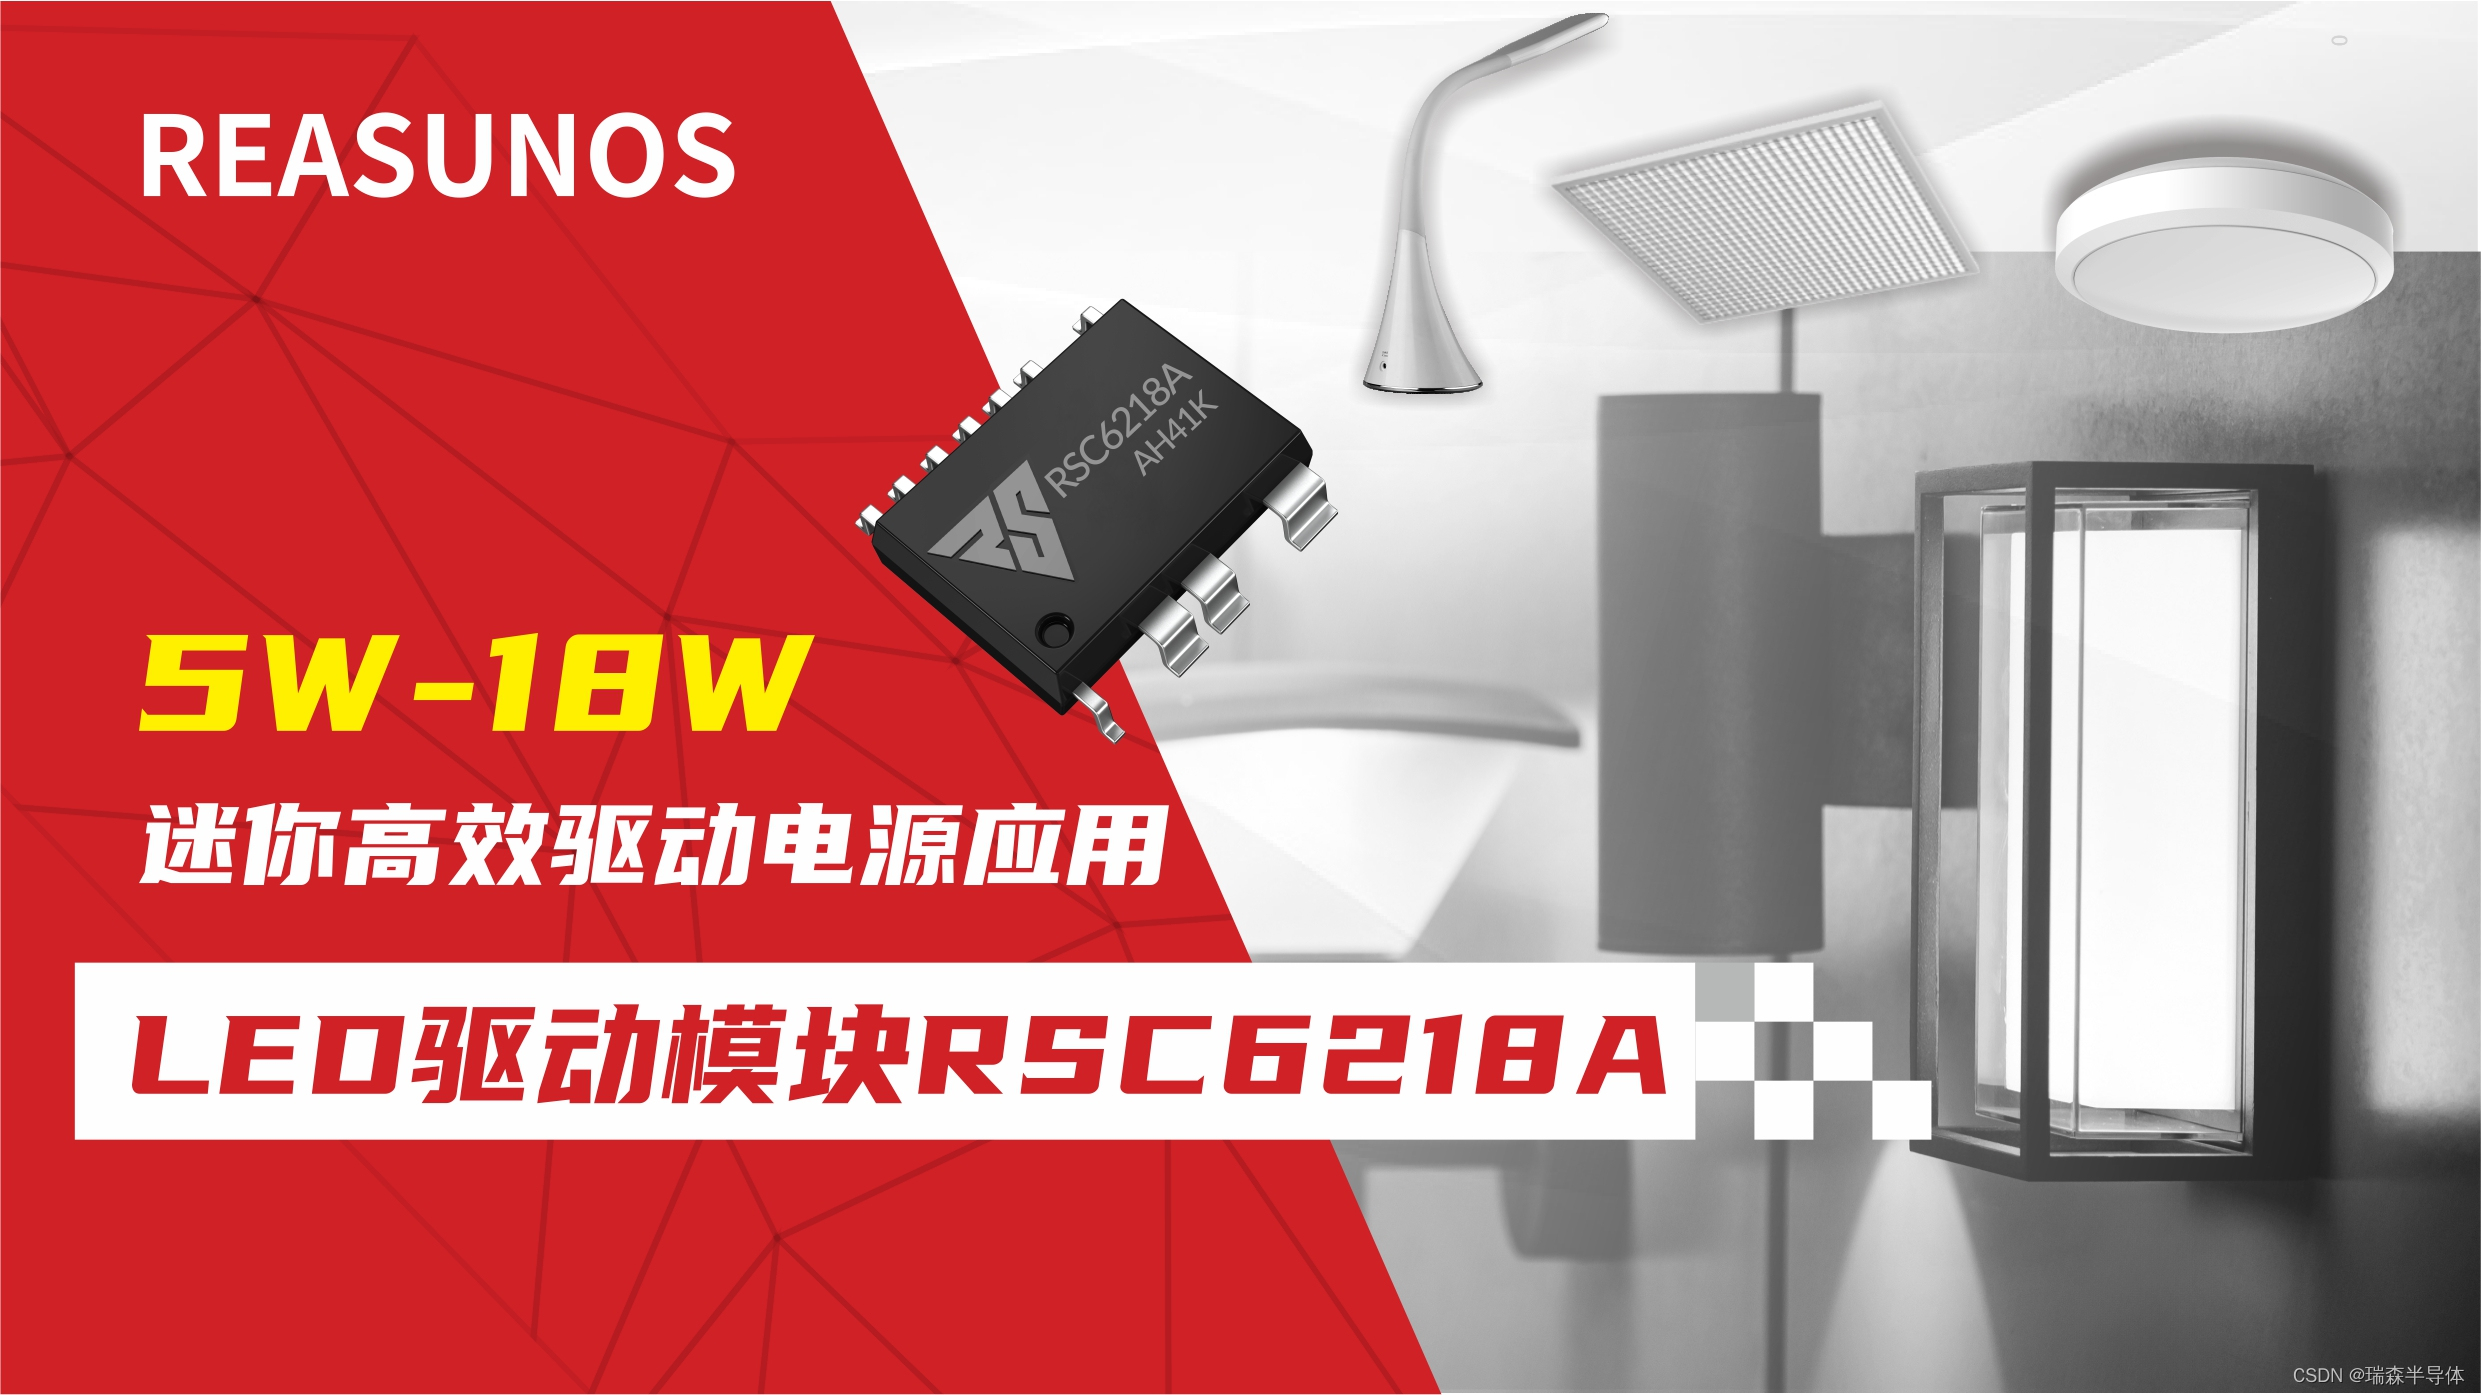 LED驱动模块RSC6218A，5W-18W迷你高效驱动电源应用